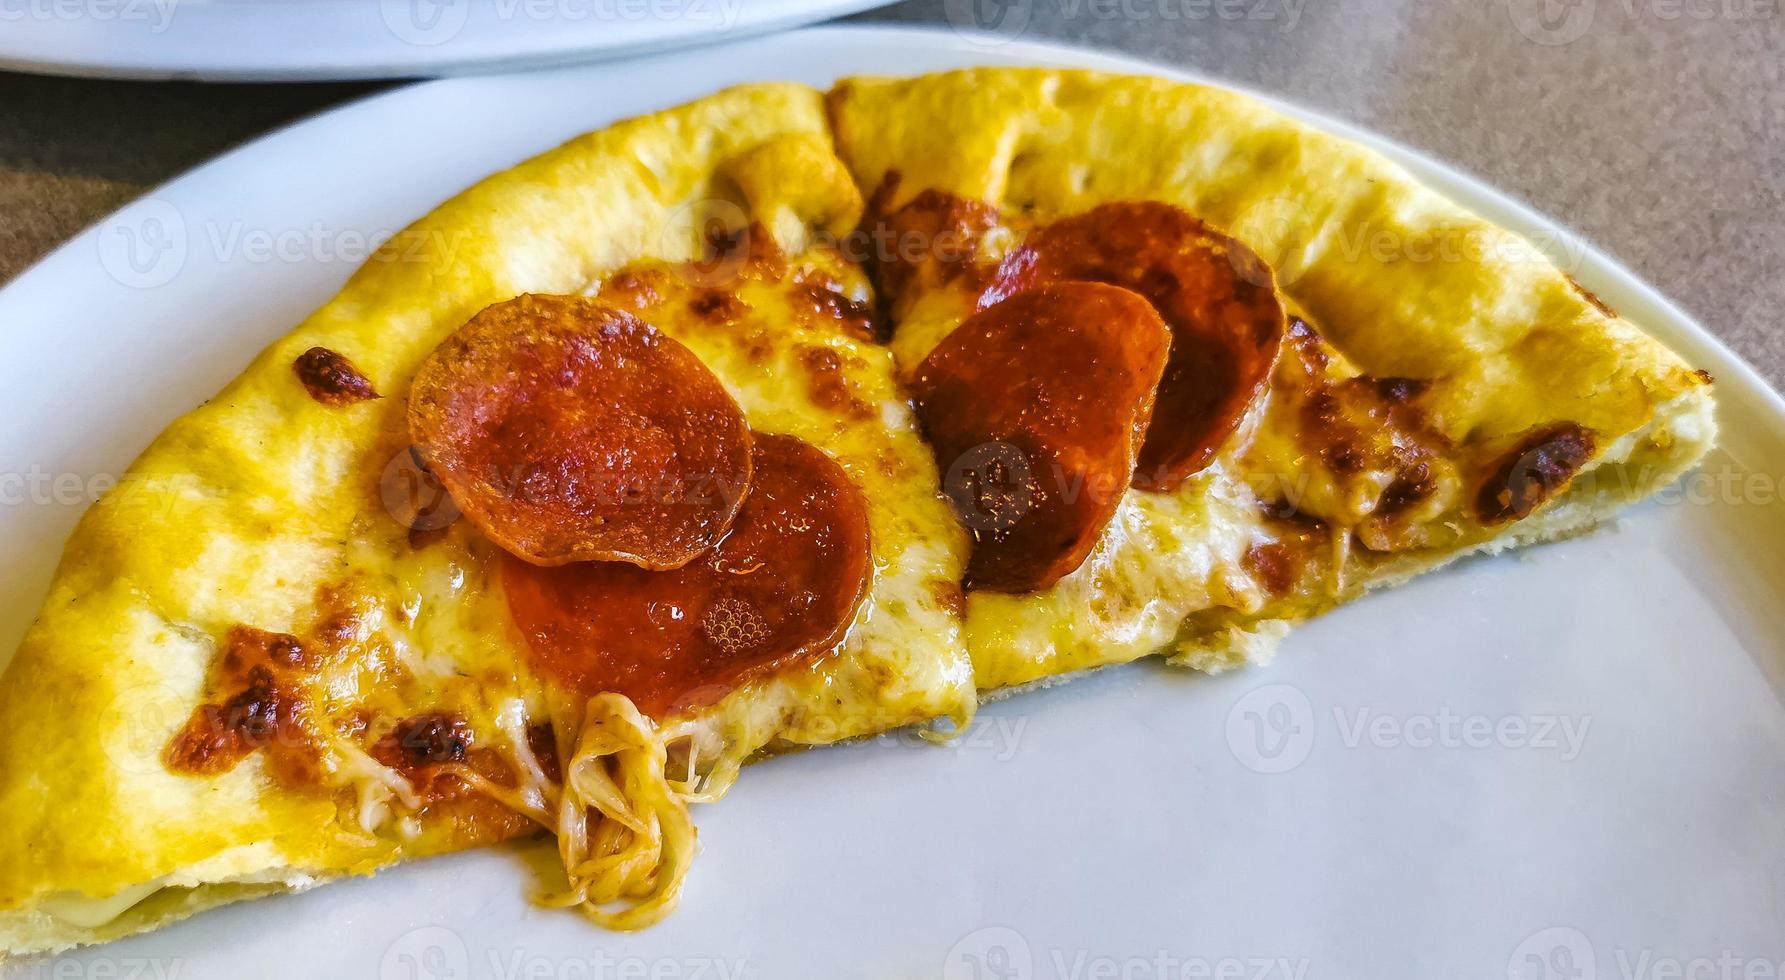 pizza de pepperoni con salami gordo en pizza hut en costa rica. foto